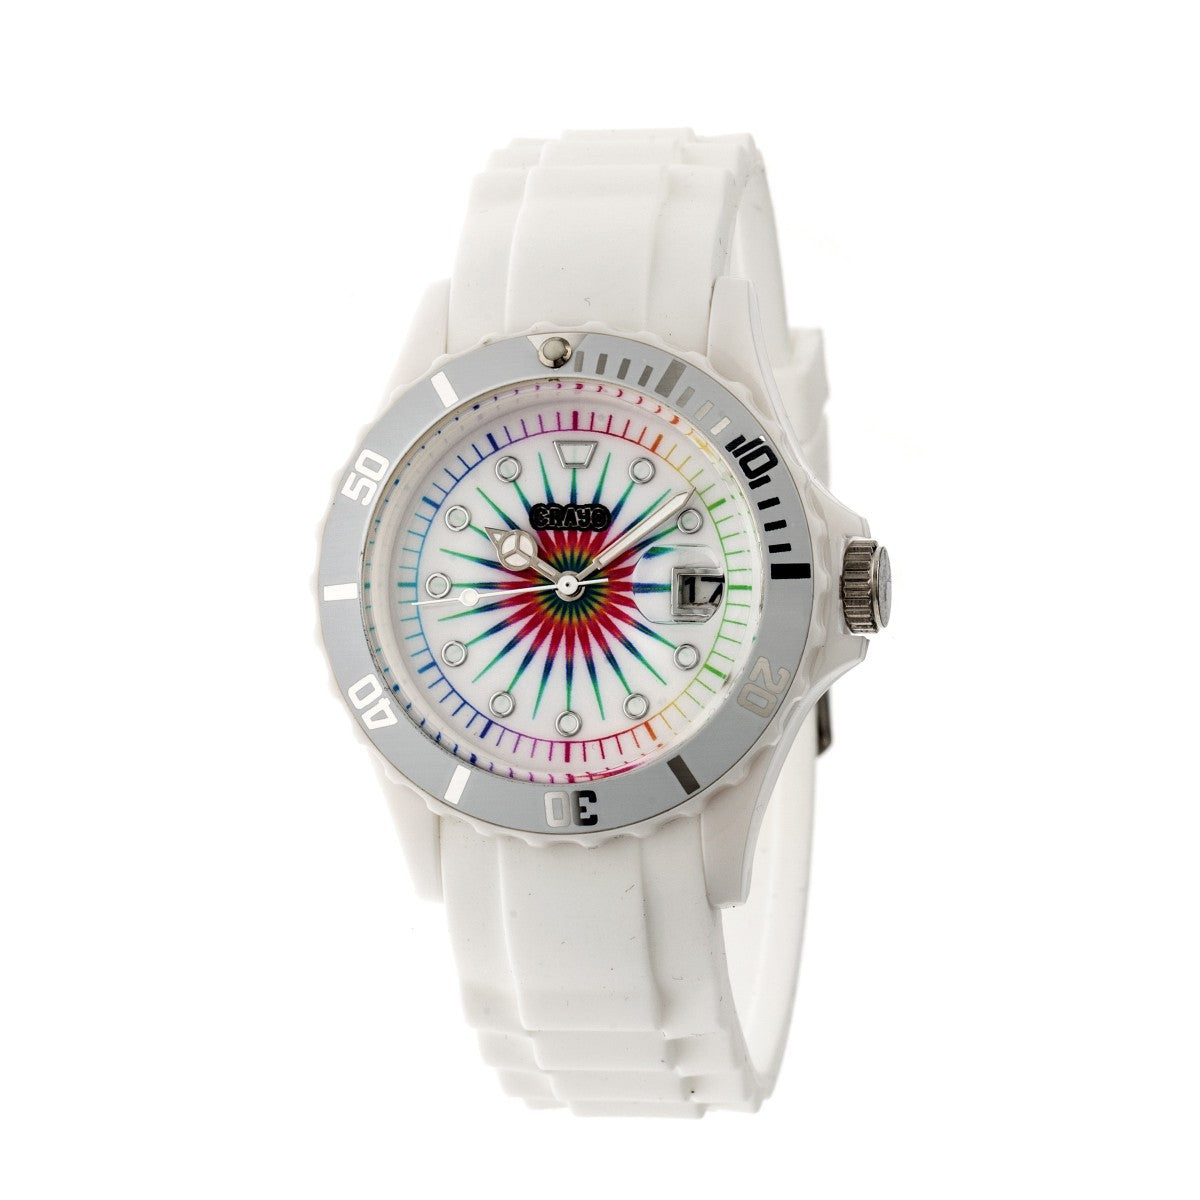 Crayo Shrine Unisex Watch w/ Magnified Date - White - CRACR3001